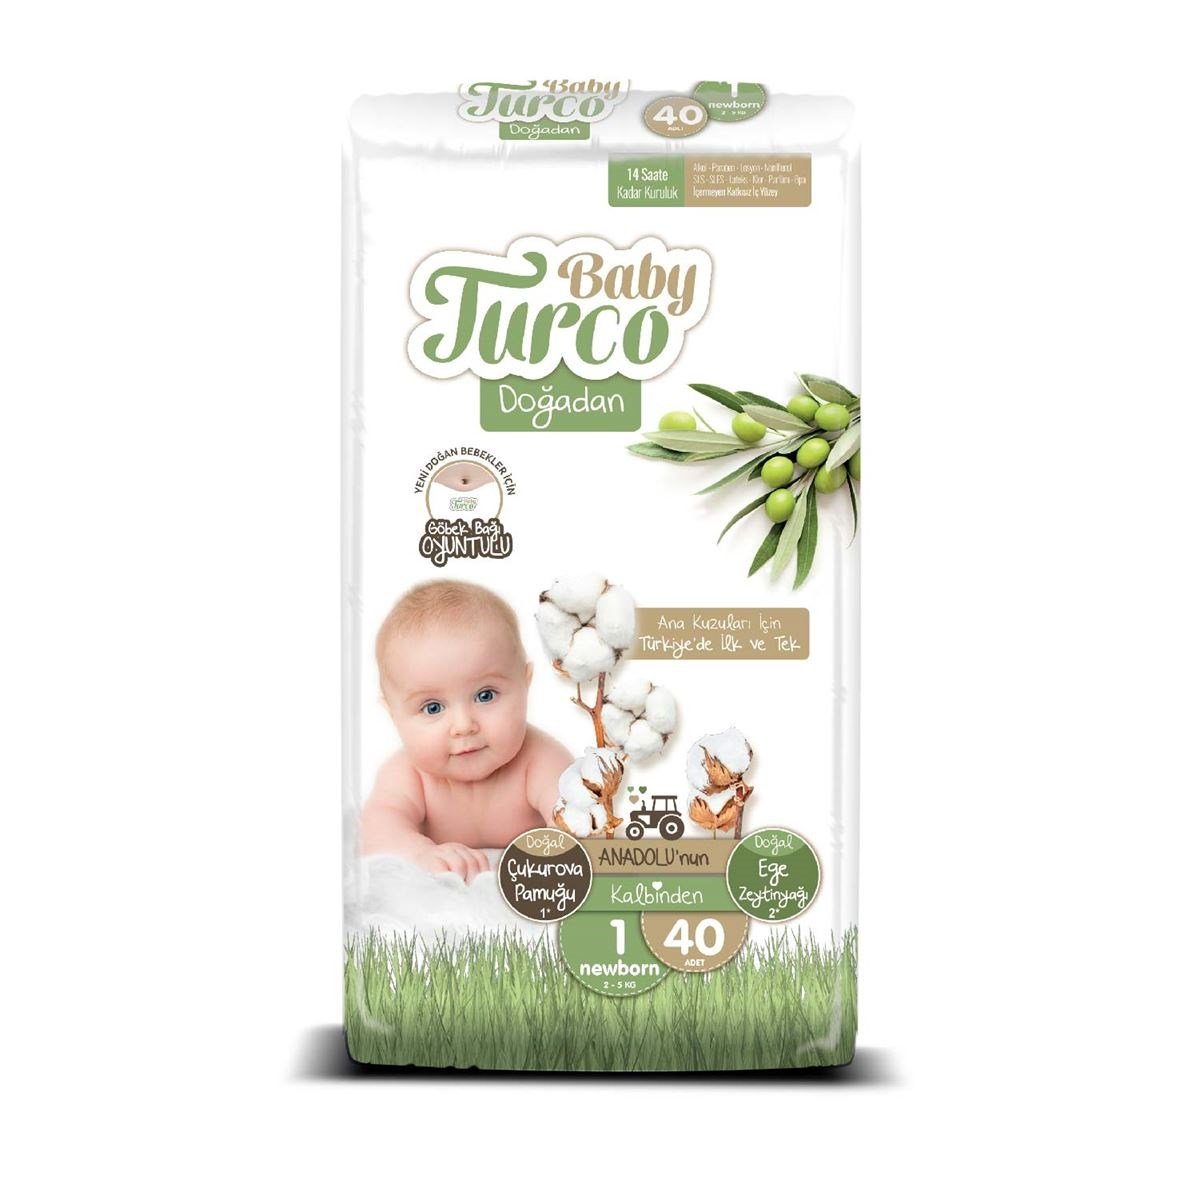 Baby Turco Doğadan Bebek Bezi 1 Numara Newborn 40 Adet - Kampanya, İndirim